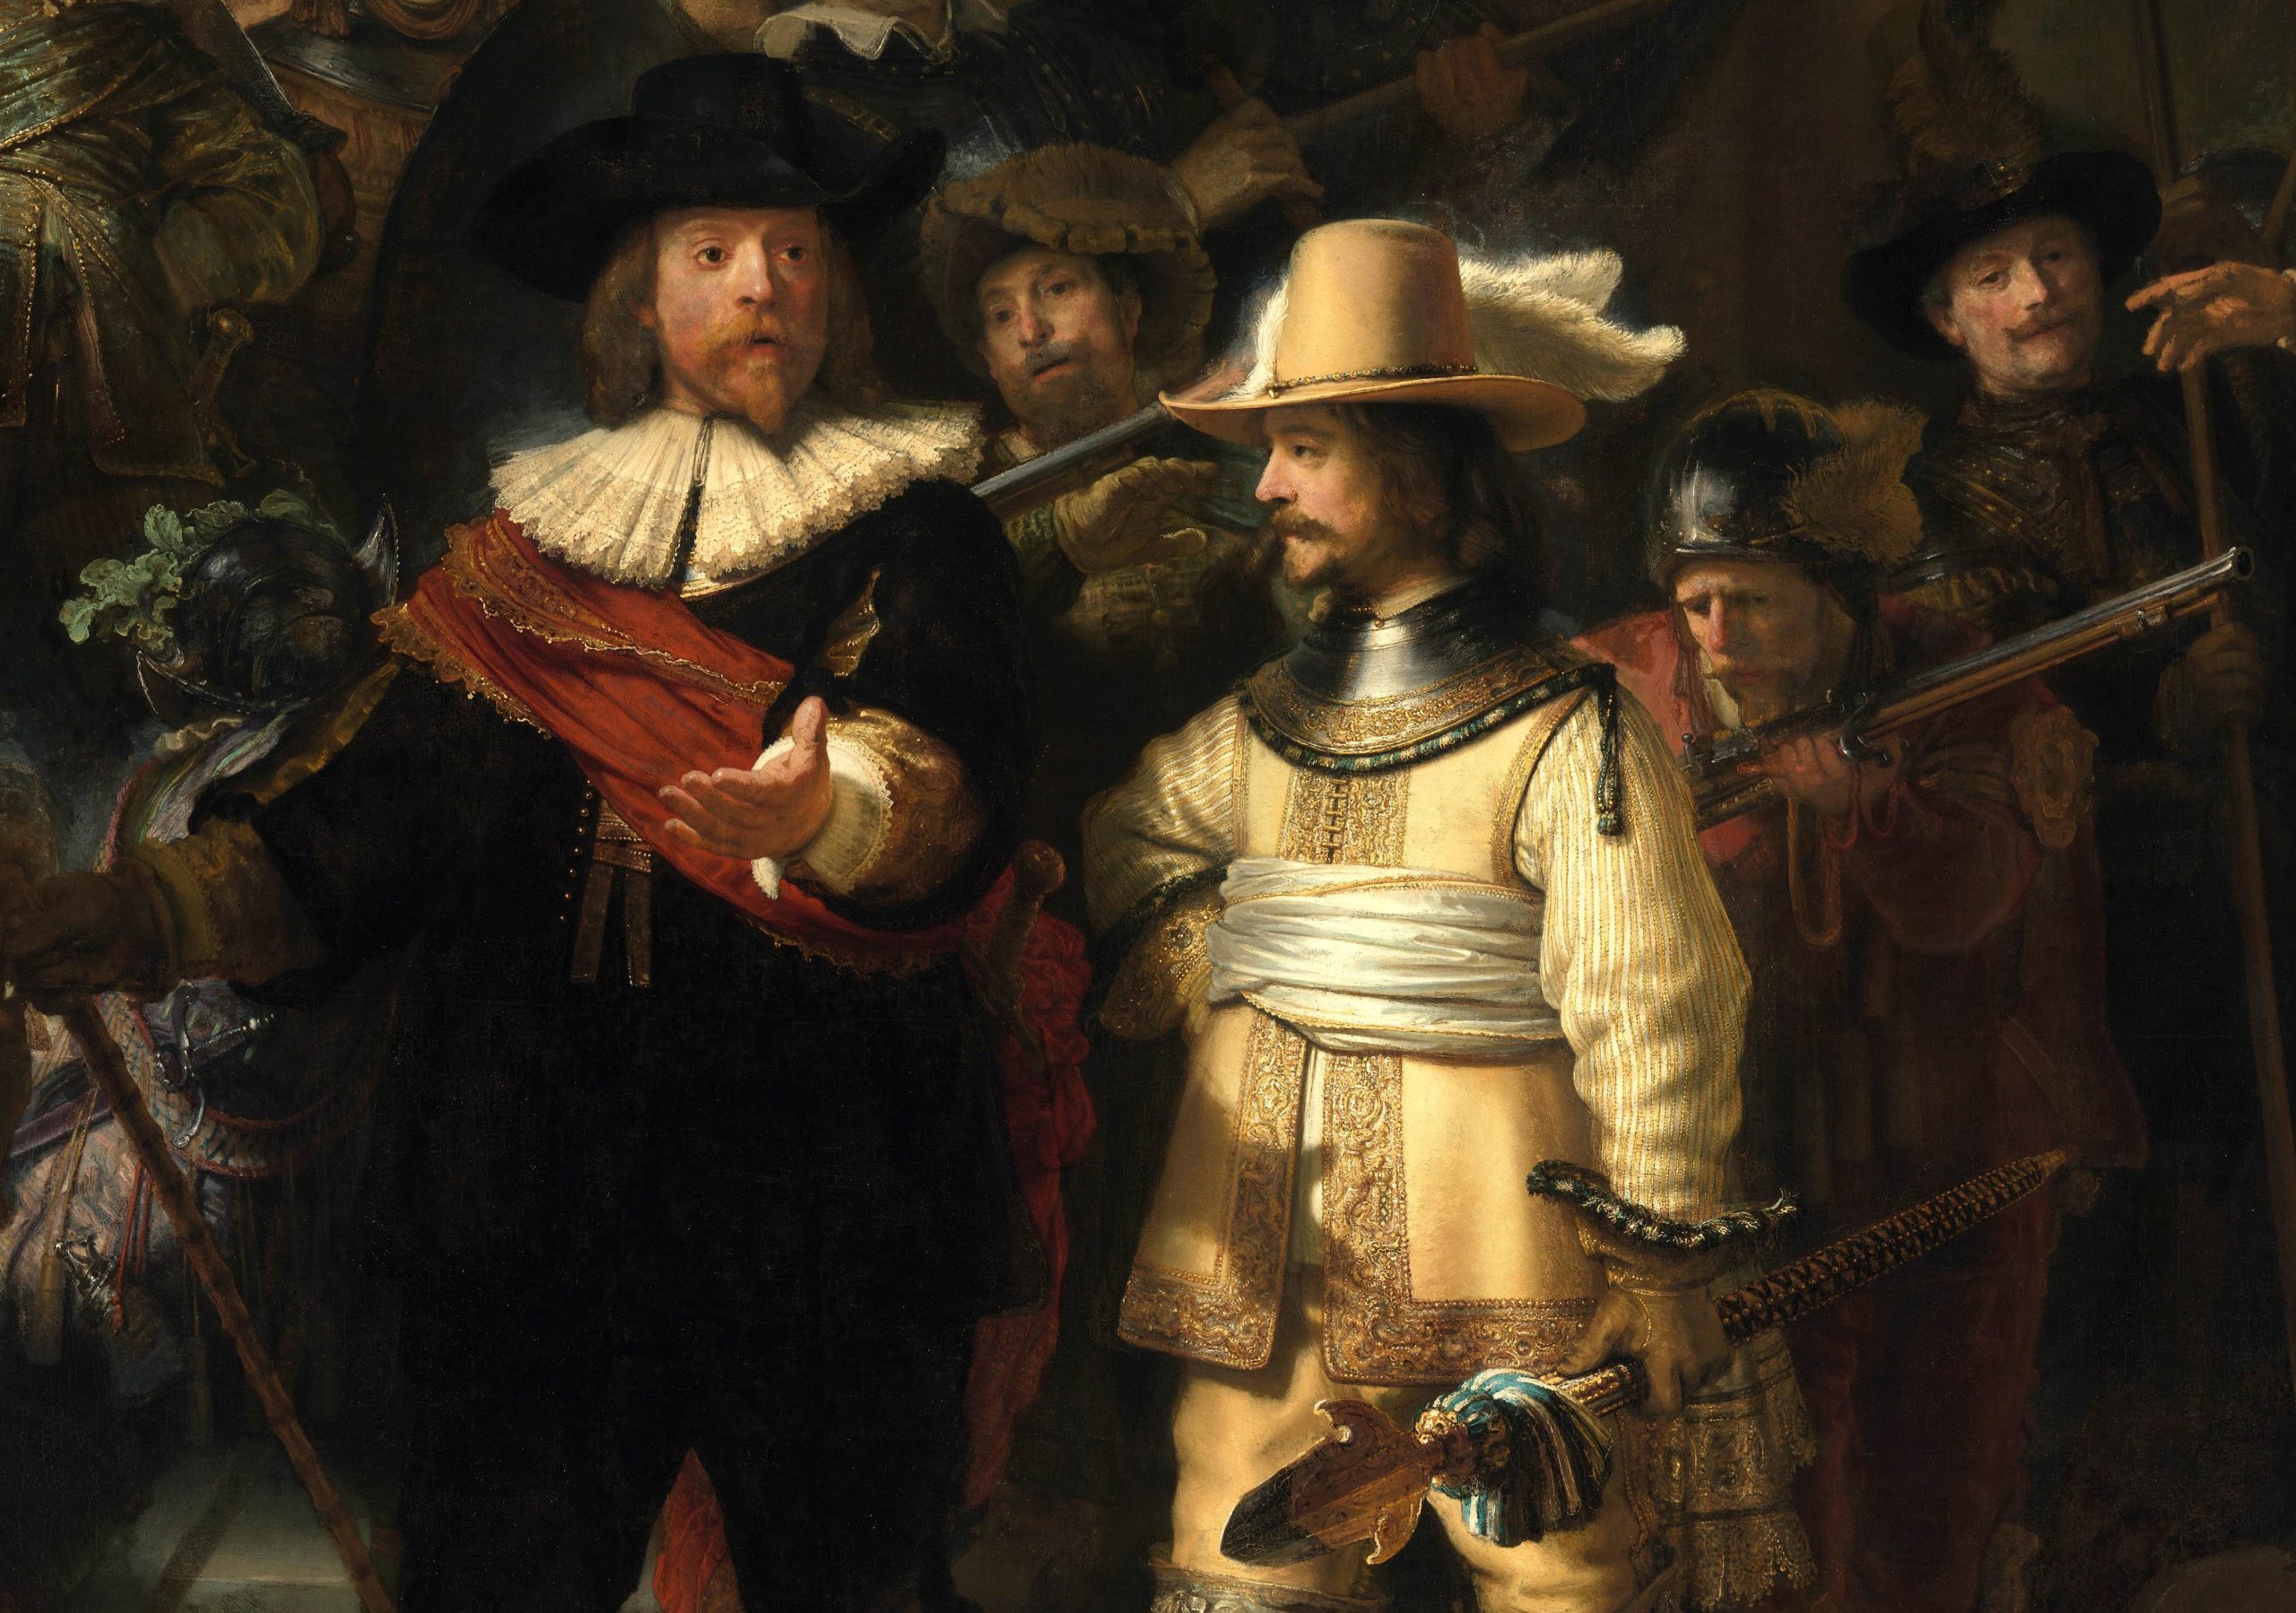 Captain and Lieutenant (detail), Rembrandt van Rijn, The Night Watch, 1642, oil on canvas, 379.5 x 453.5 cm (Rijksmuseum, Amsterdam, Netherlands)